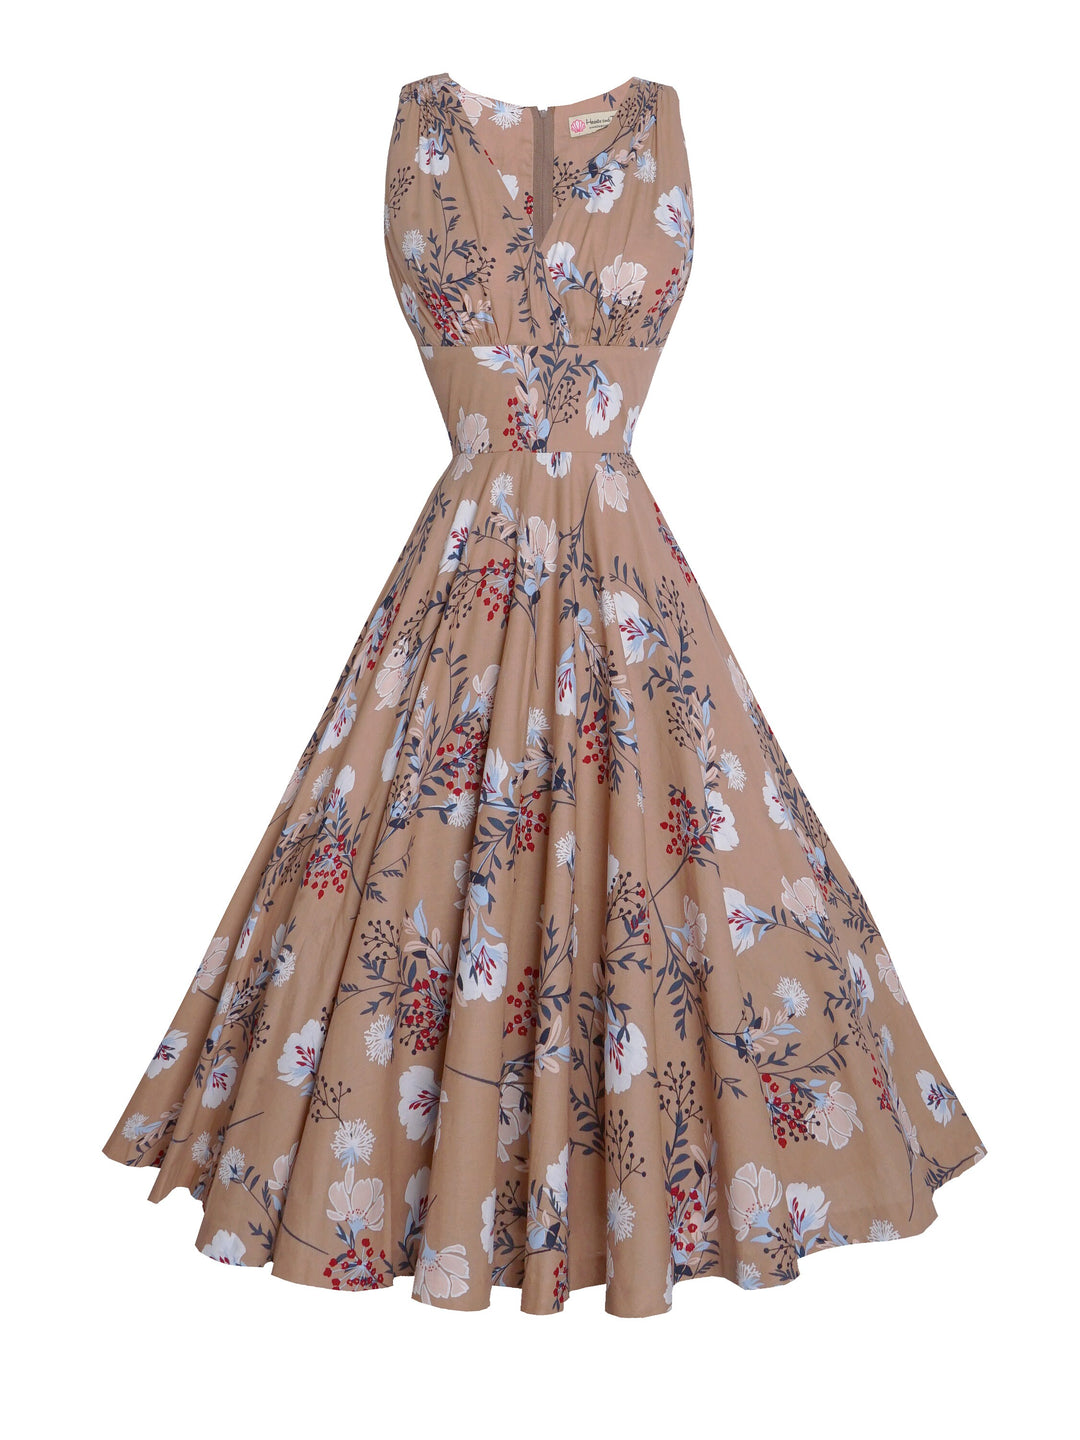 RTS - Size S - Carolyn Dress "Desert Flower" Floral Print